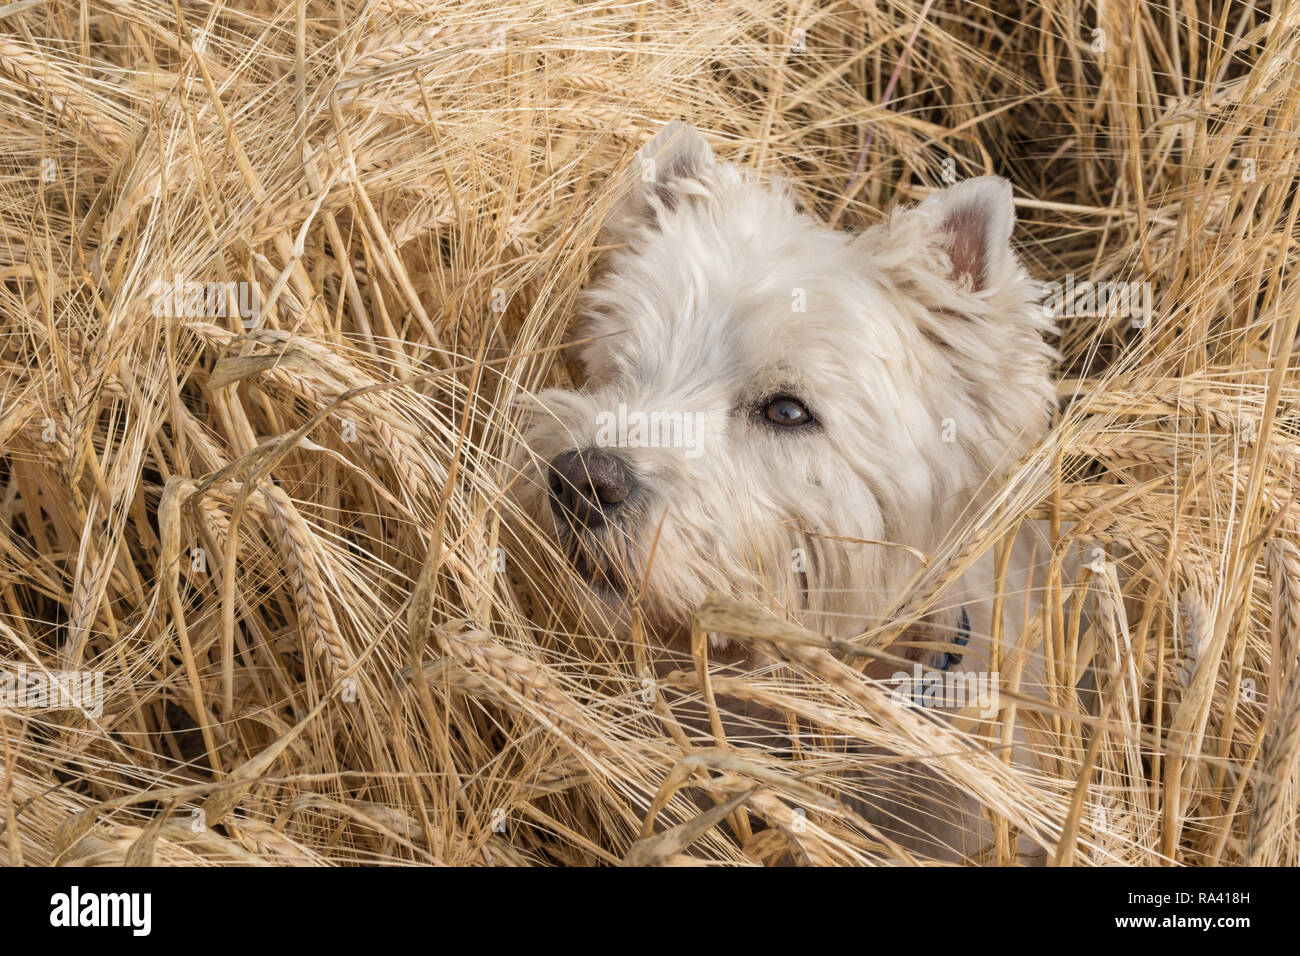 west england terrier